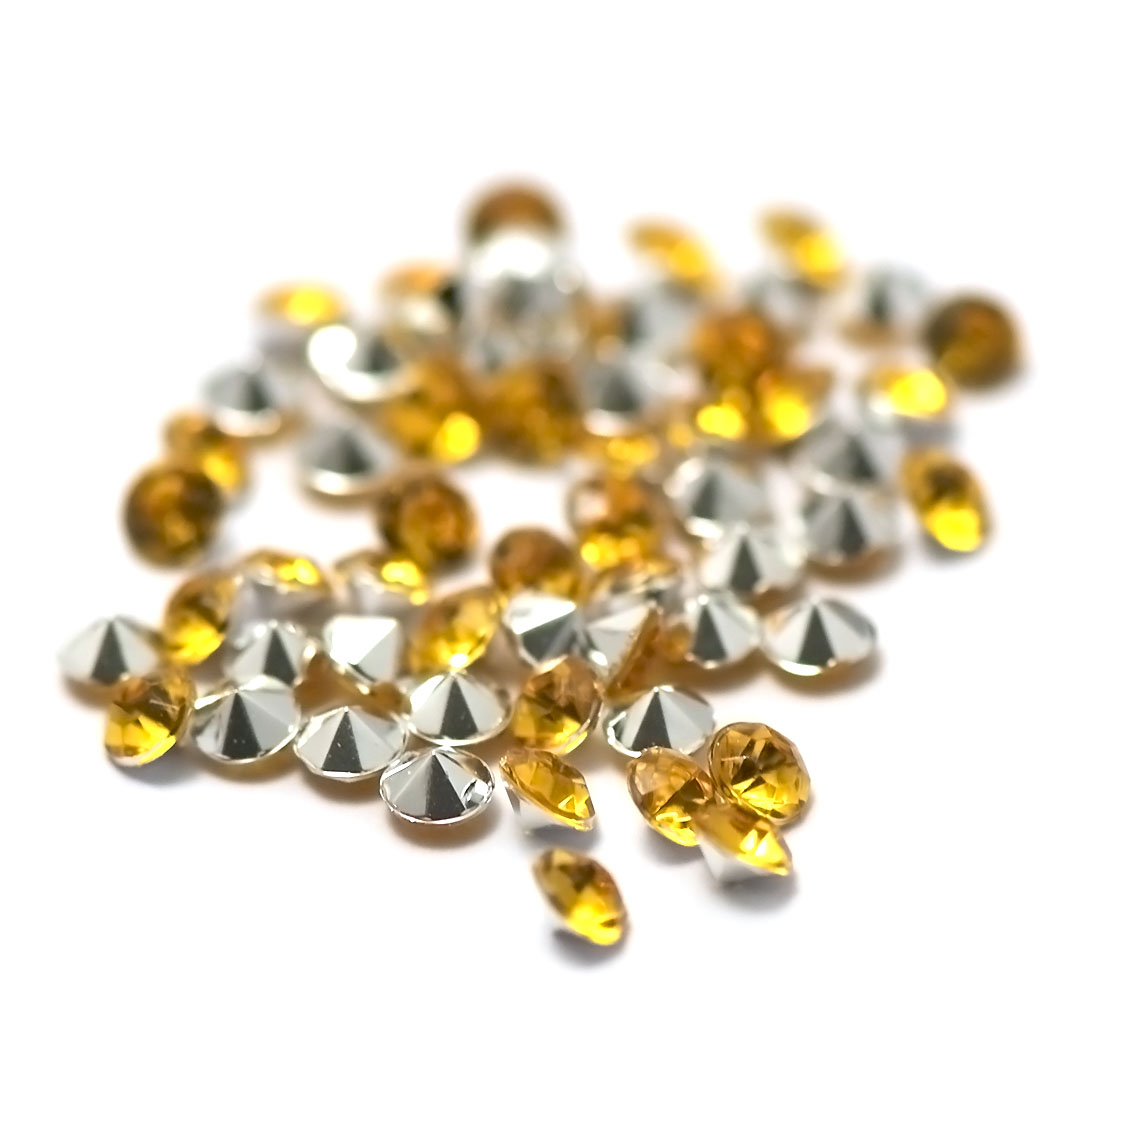 5g de perles strass en verre à coller cône 4 mm, jaune